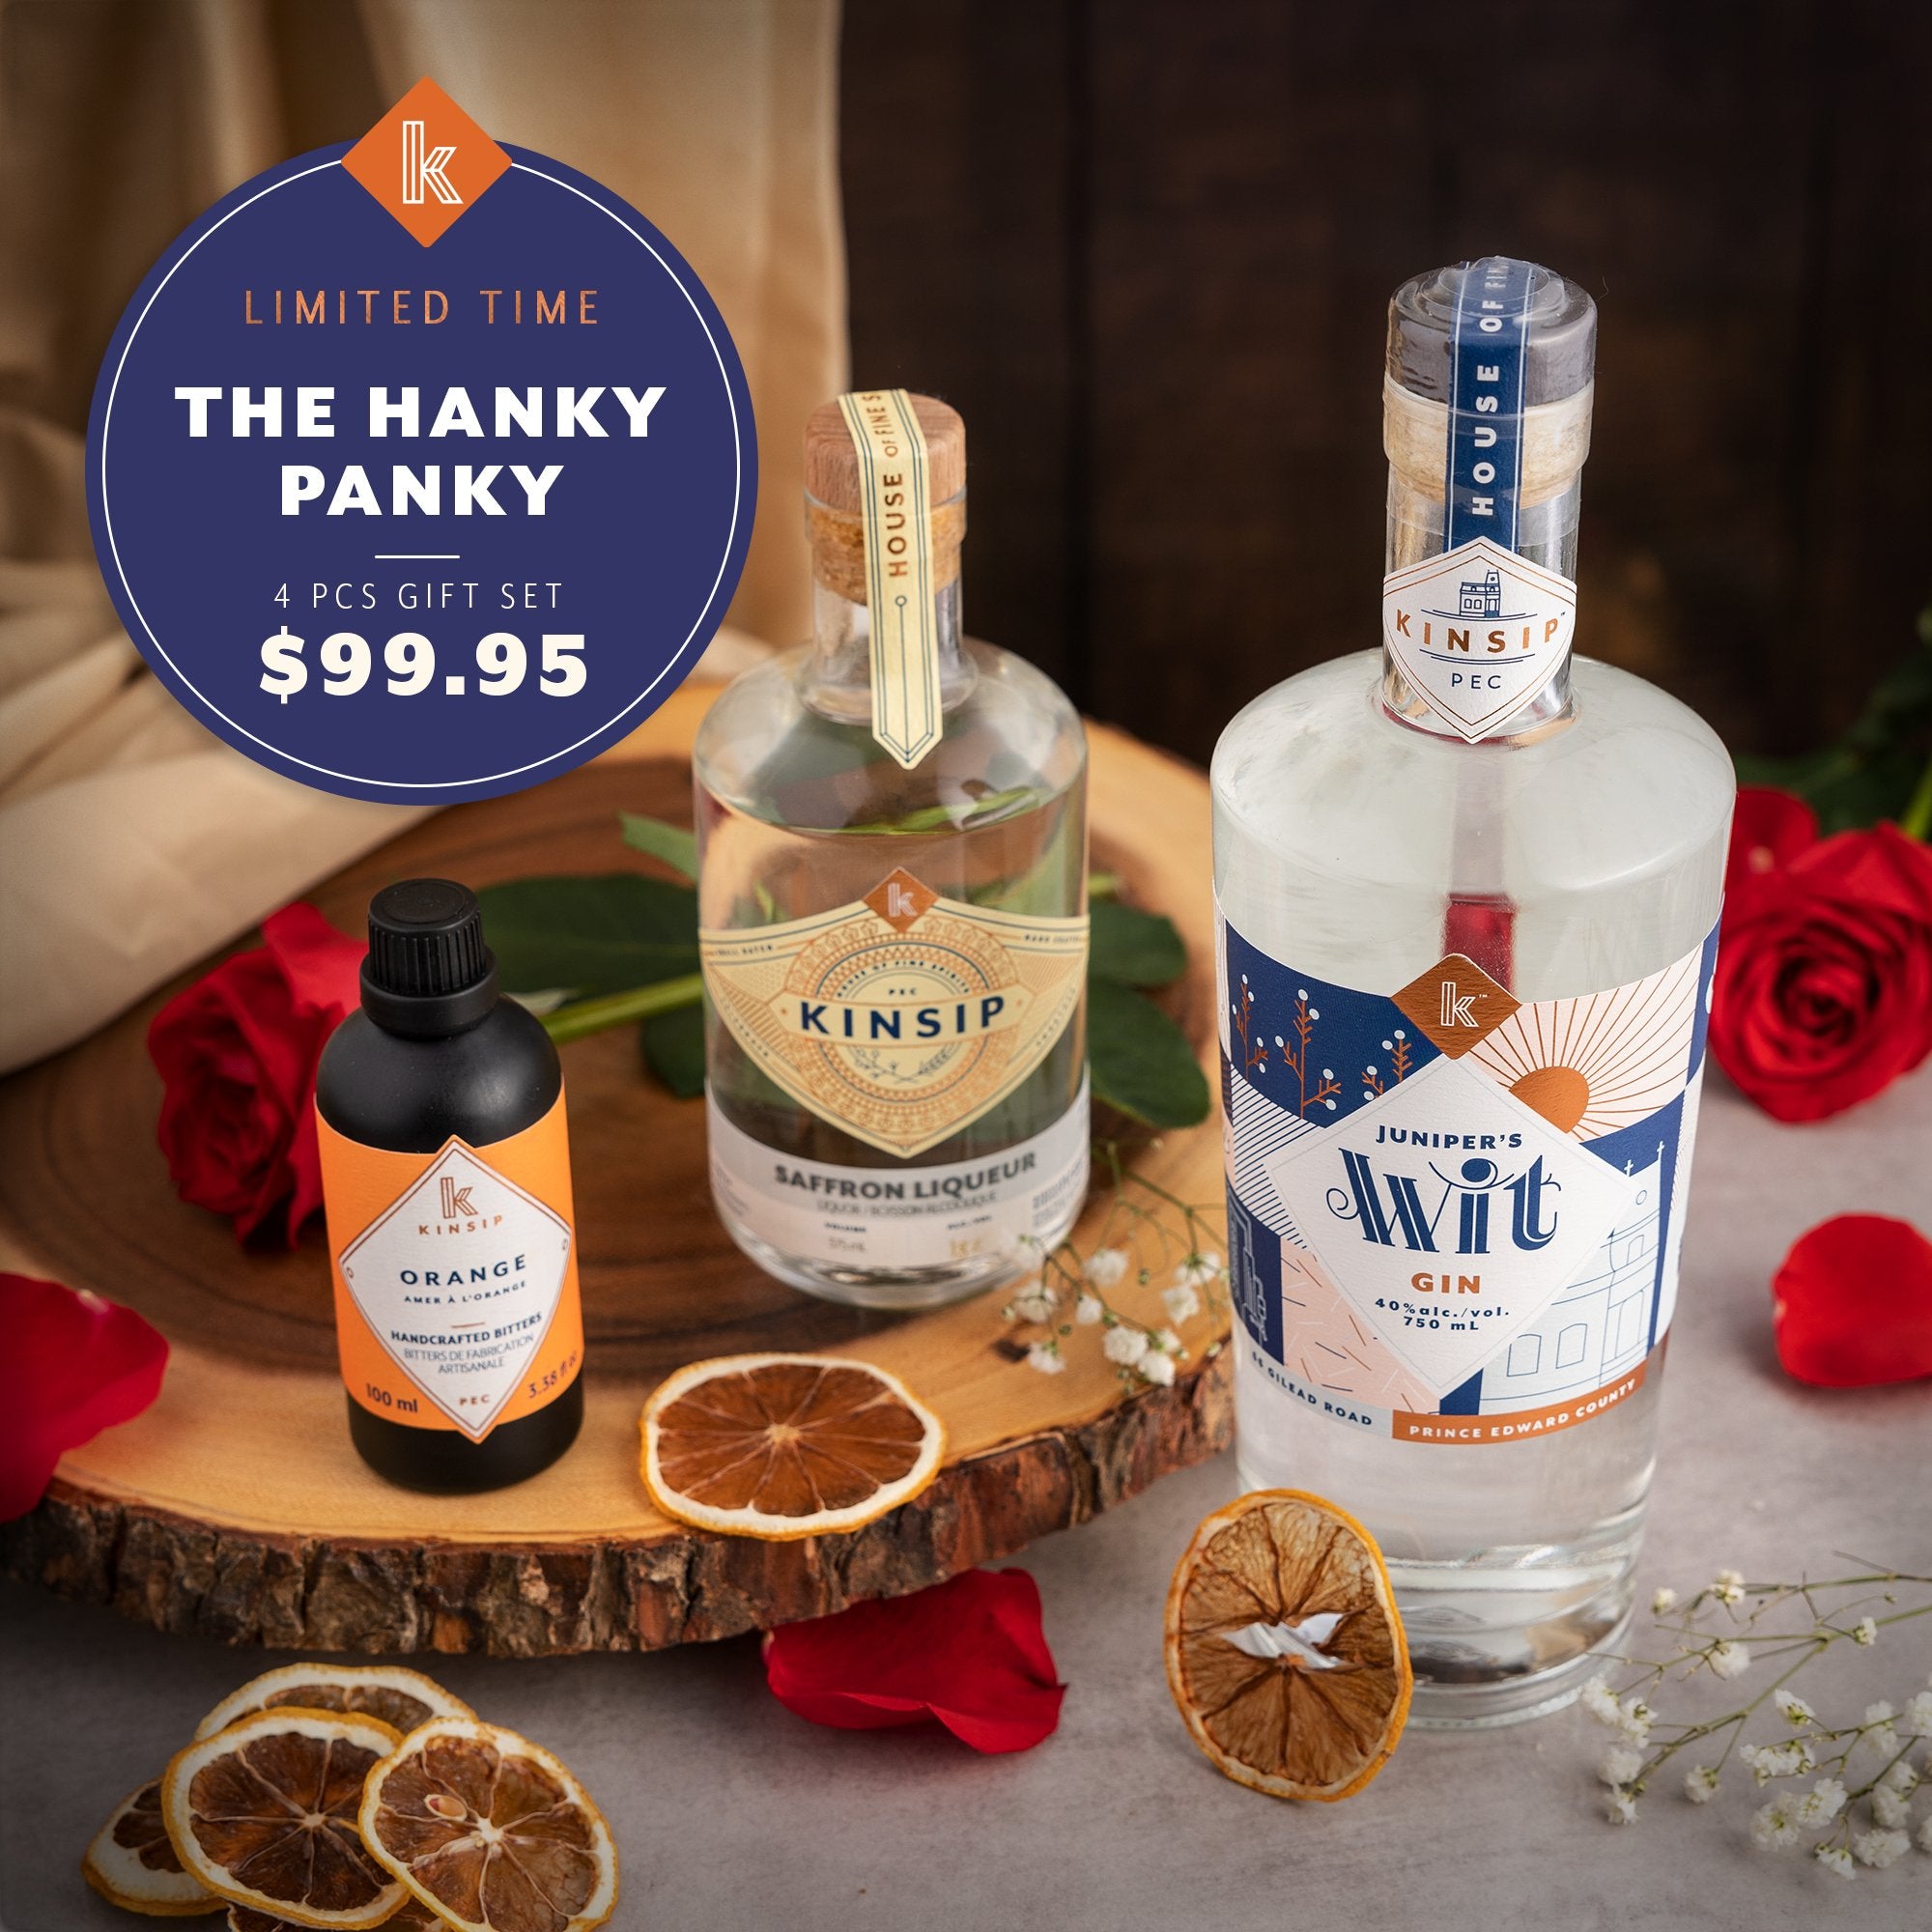 "The Hanky Panky" Gift Set